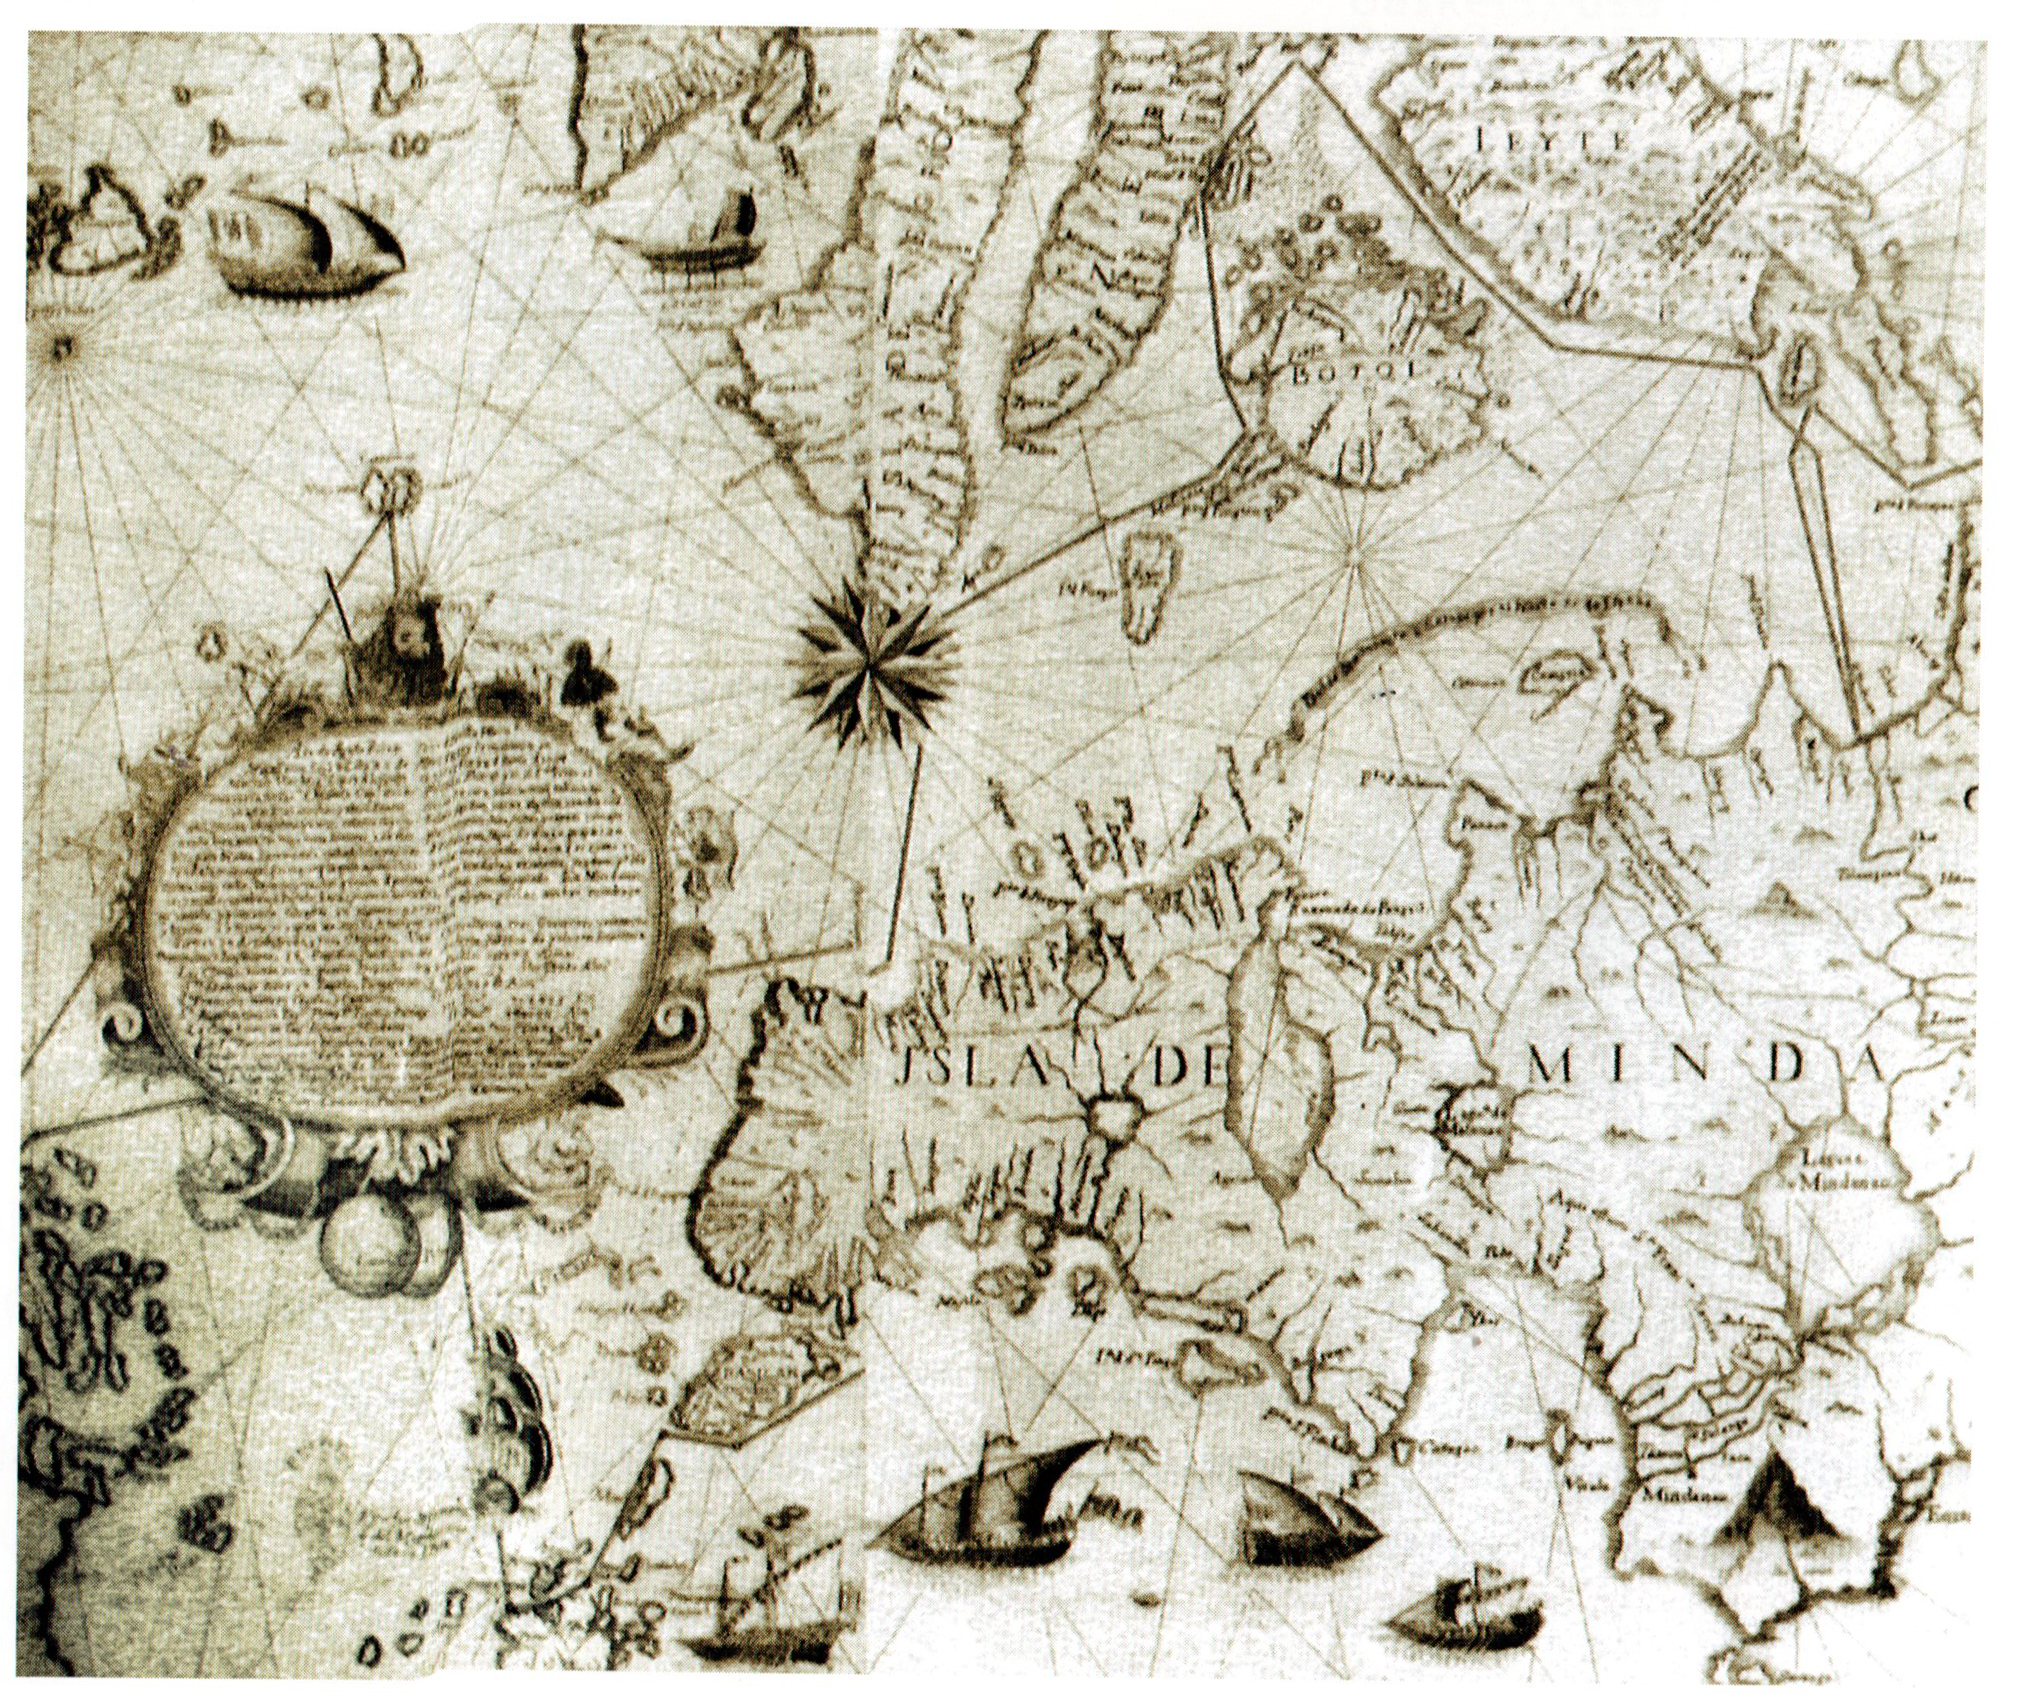 Old Map of Mindanao 1750